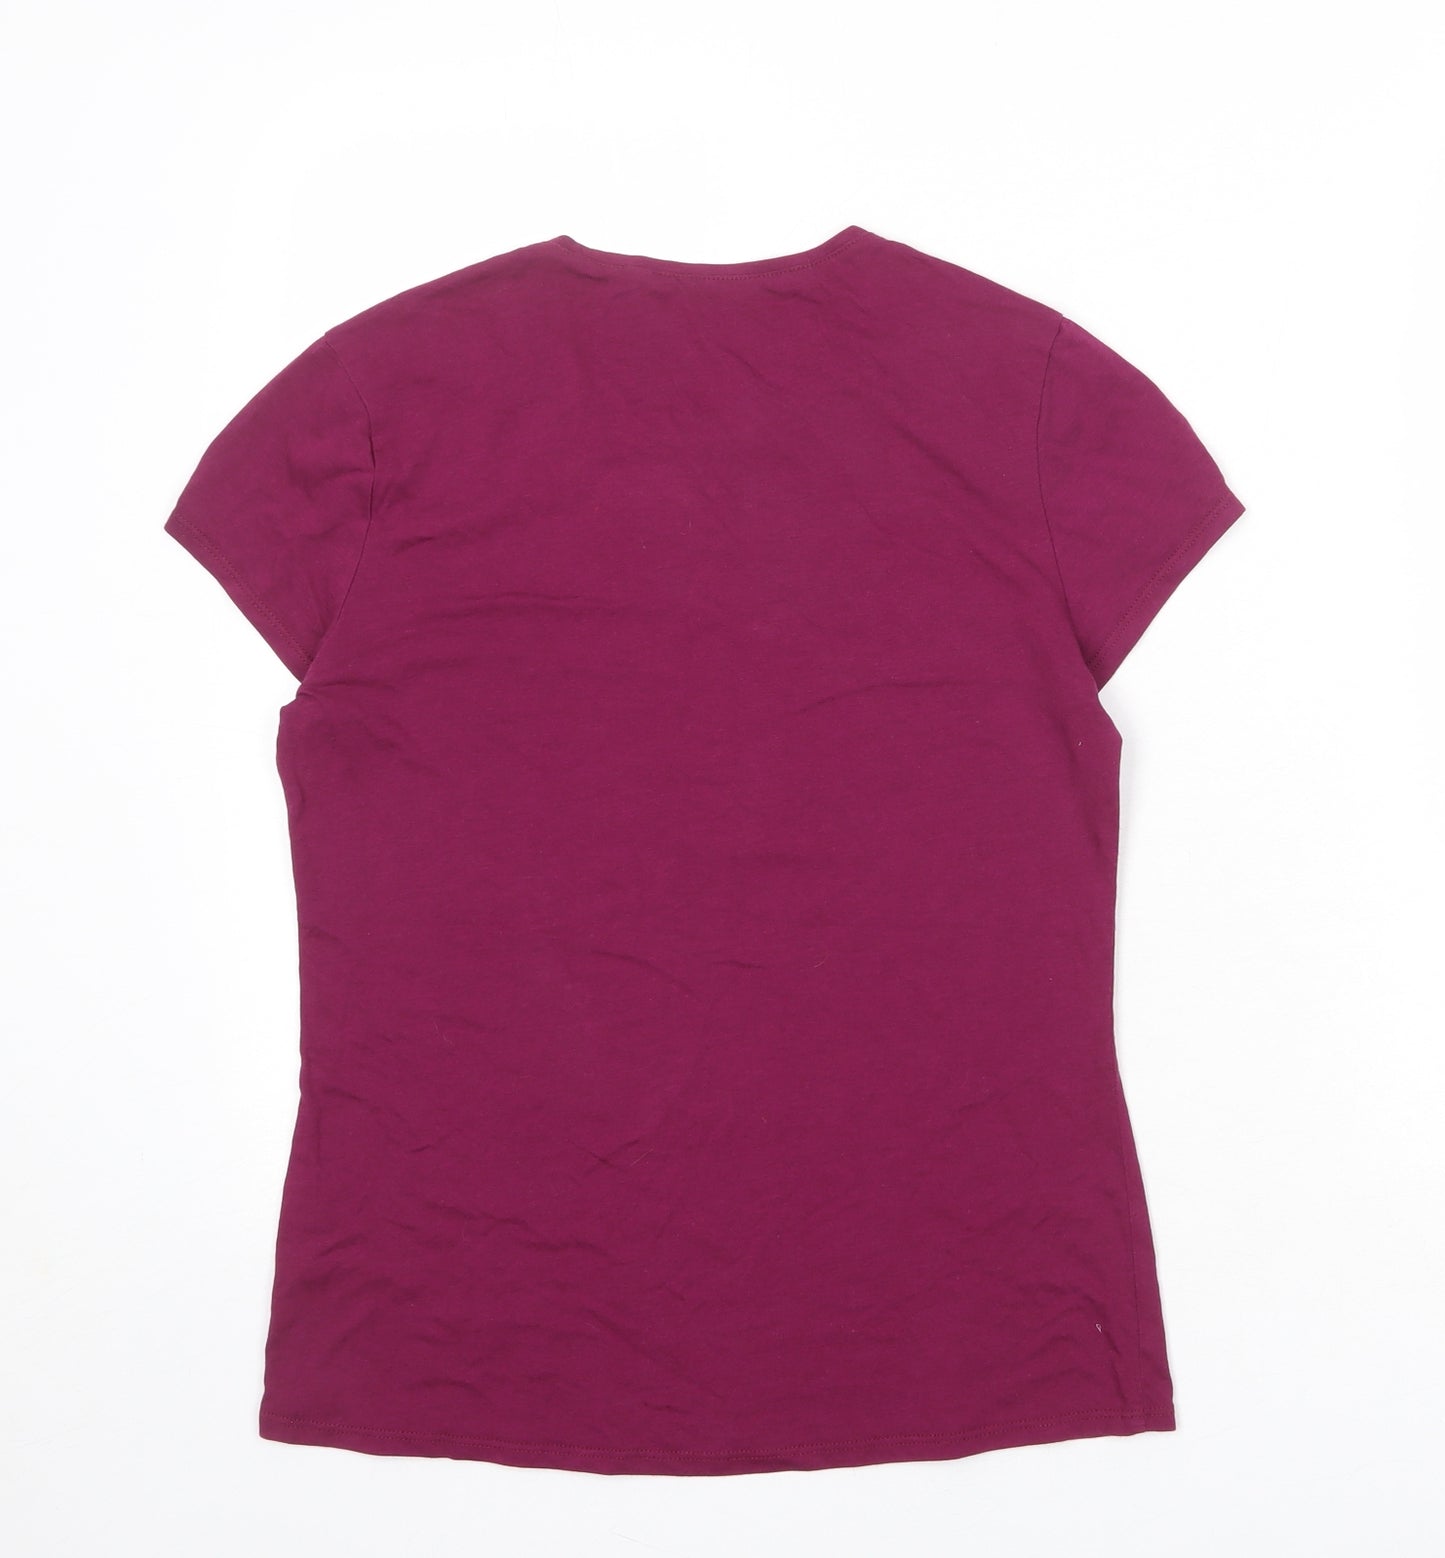 DECATHLON Womens Purple Polyester Basic T-Shirt Size S Crew Neck